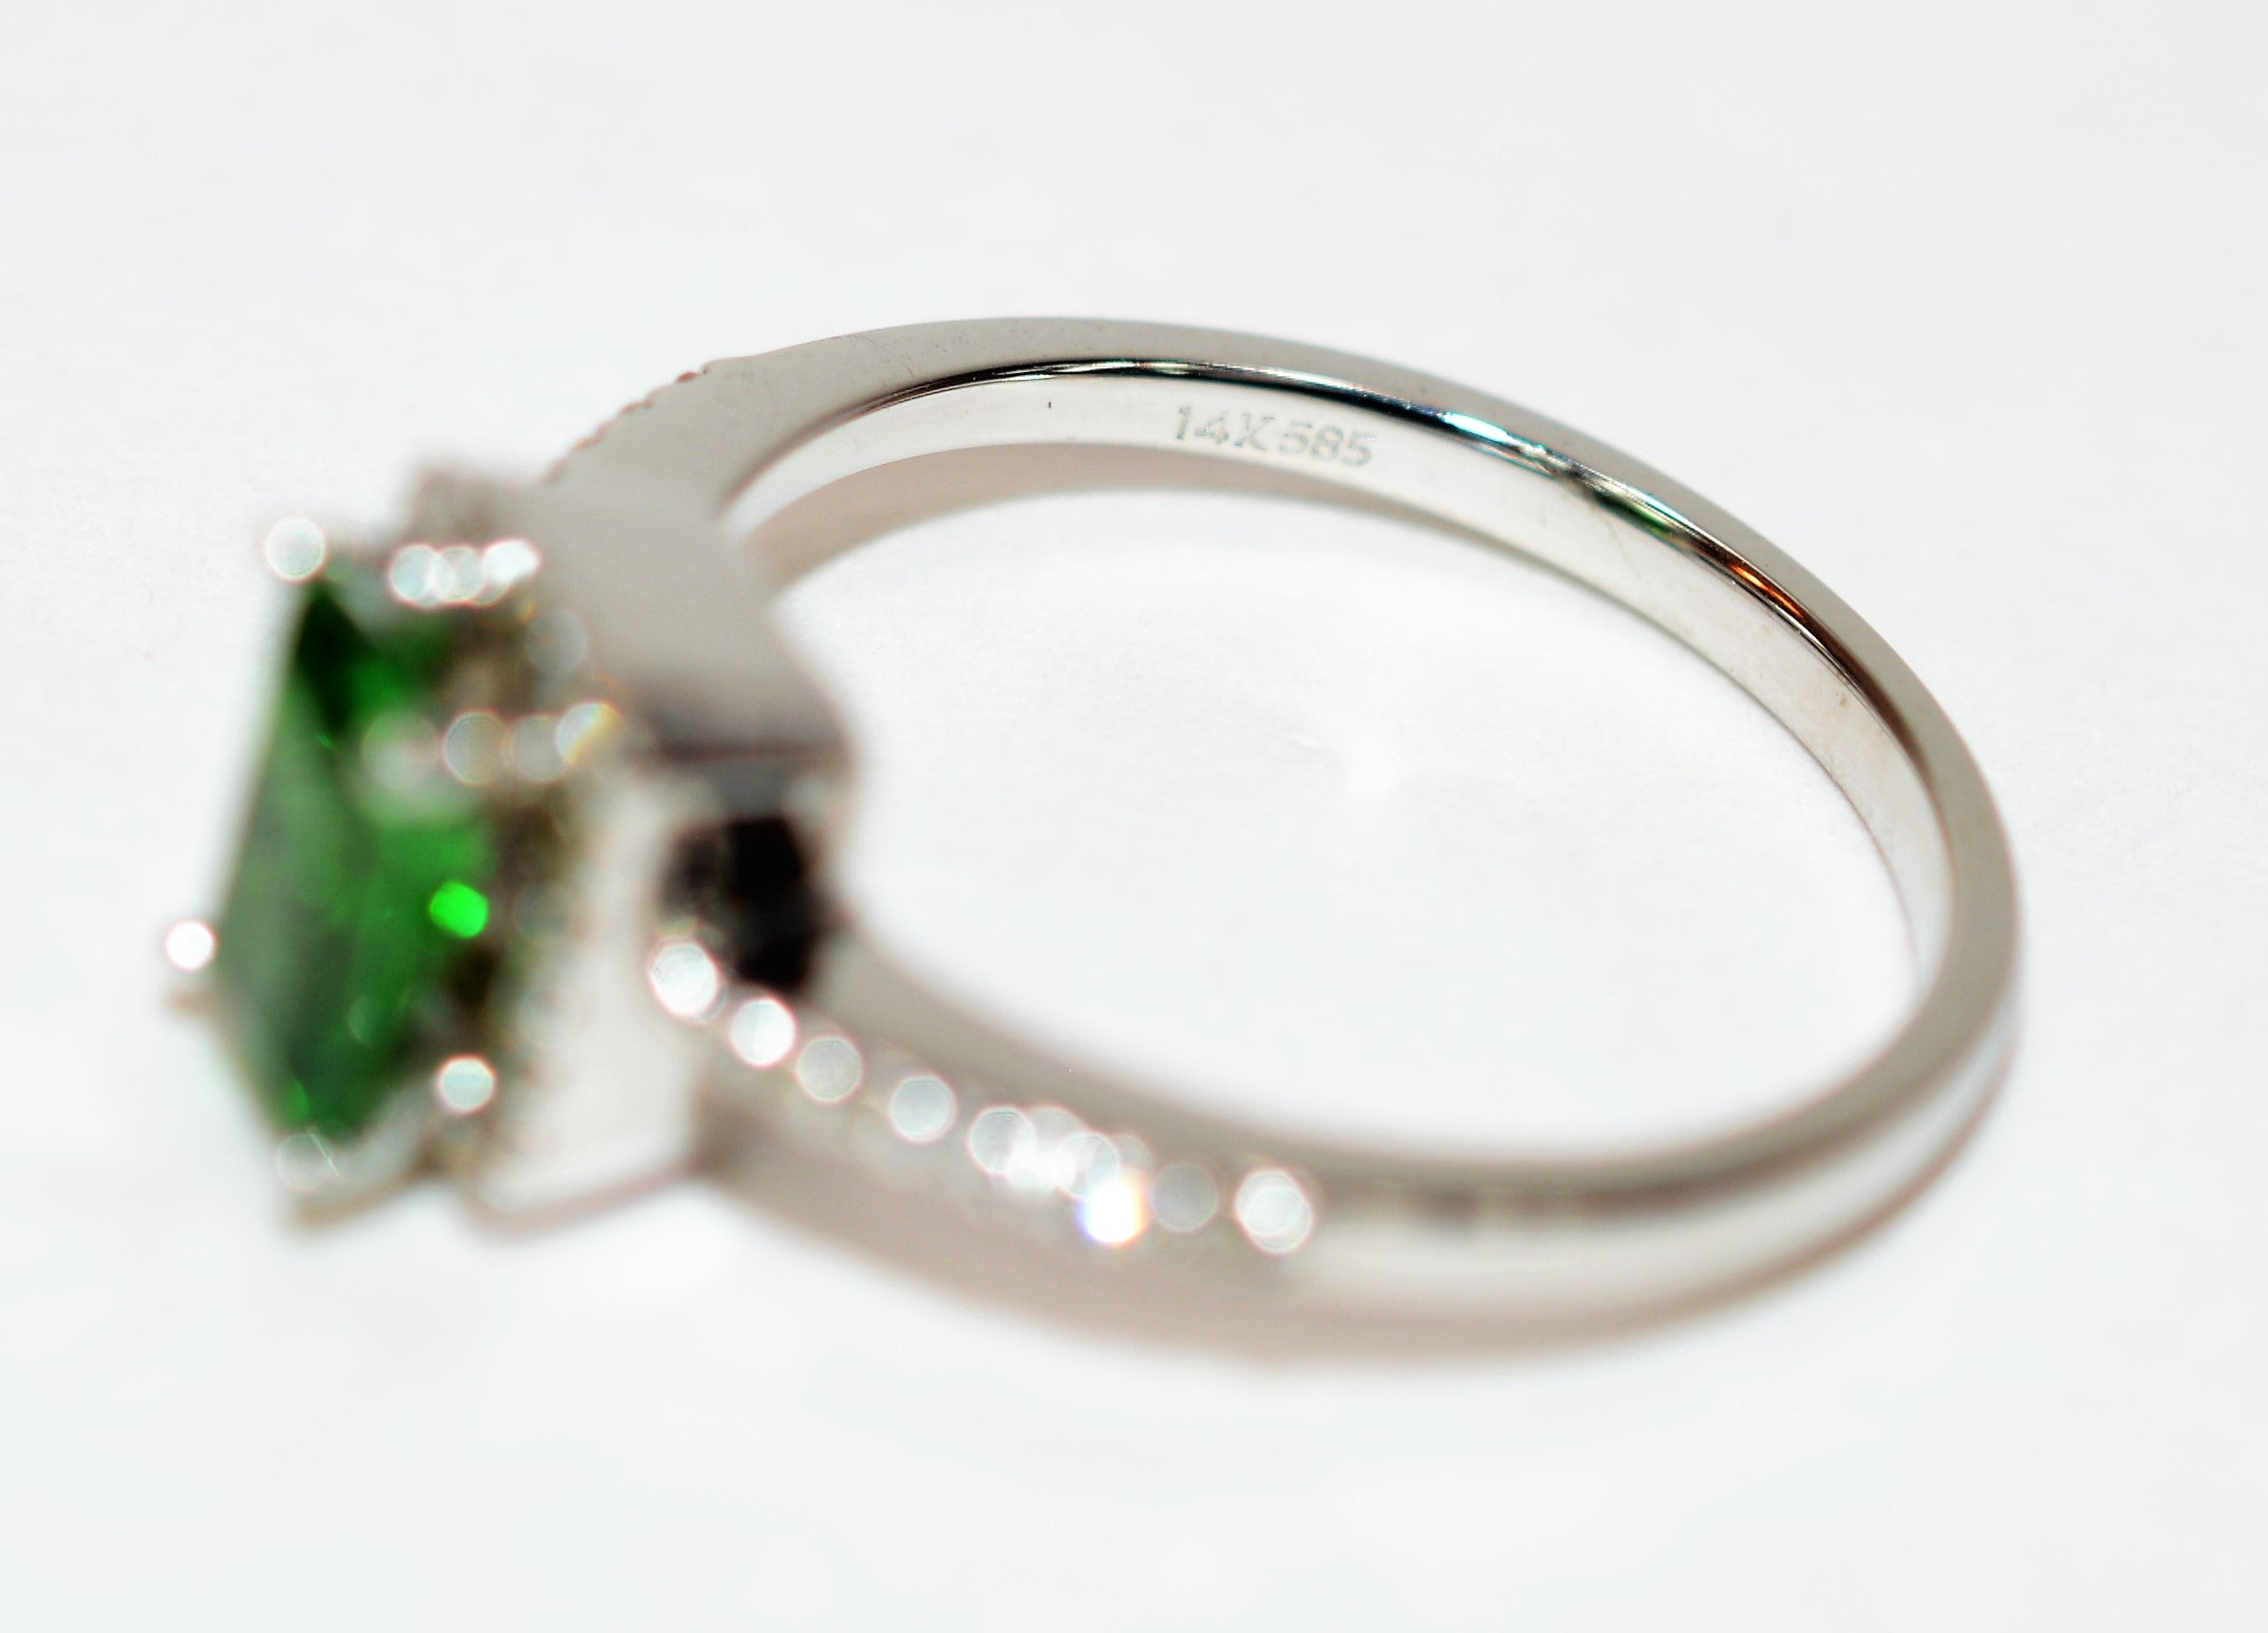 Natural Tsavorite Garnet & Diamond Ring 14K Solid White Gold 1.17tcw Engagement Ring Green Ring Wedding Ring Anniversary Ring Gemstone Ring Jewelry